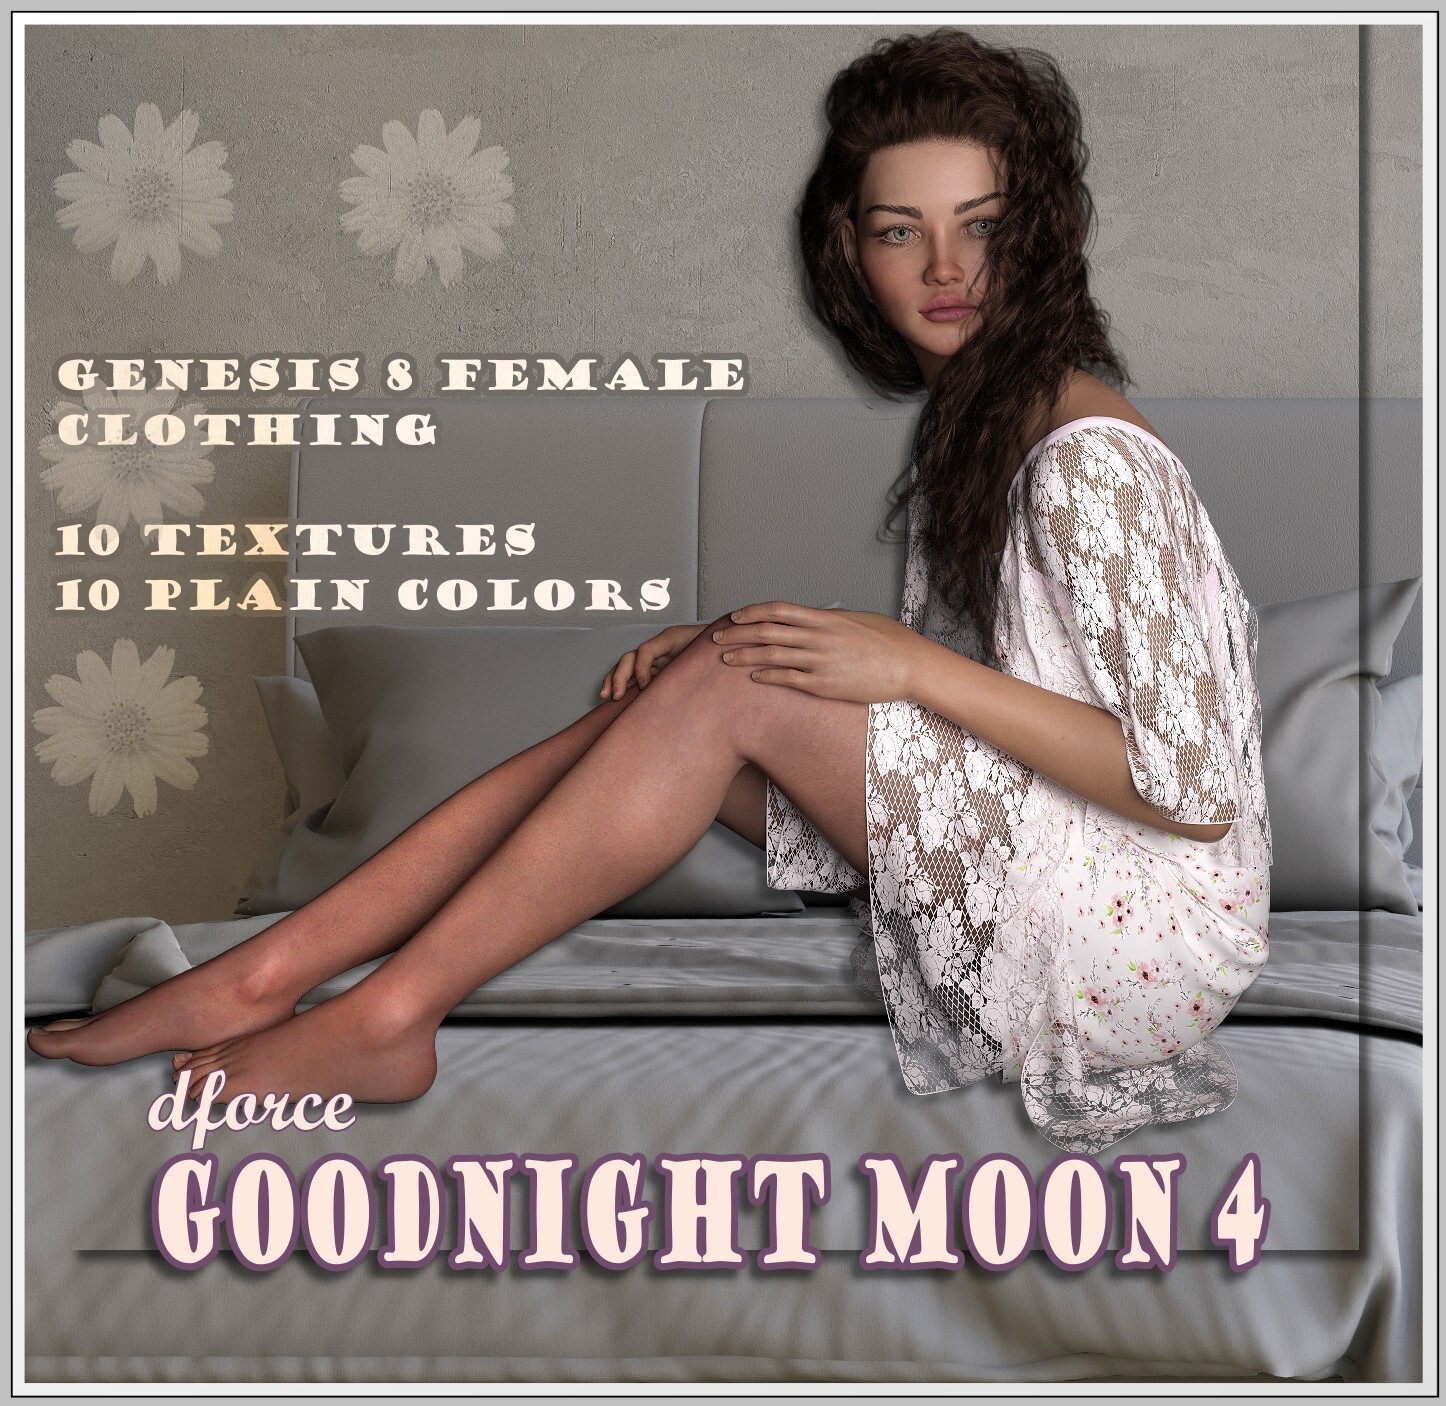 dforce-Goodnight Moon -4-Nightgown G8F by: LUNA3D, 3D Models by Daz 3D